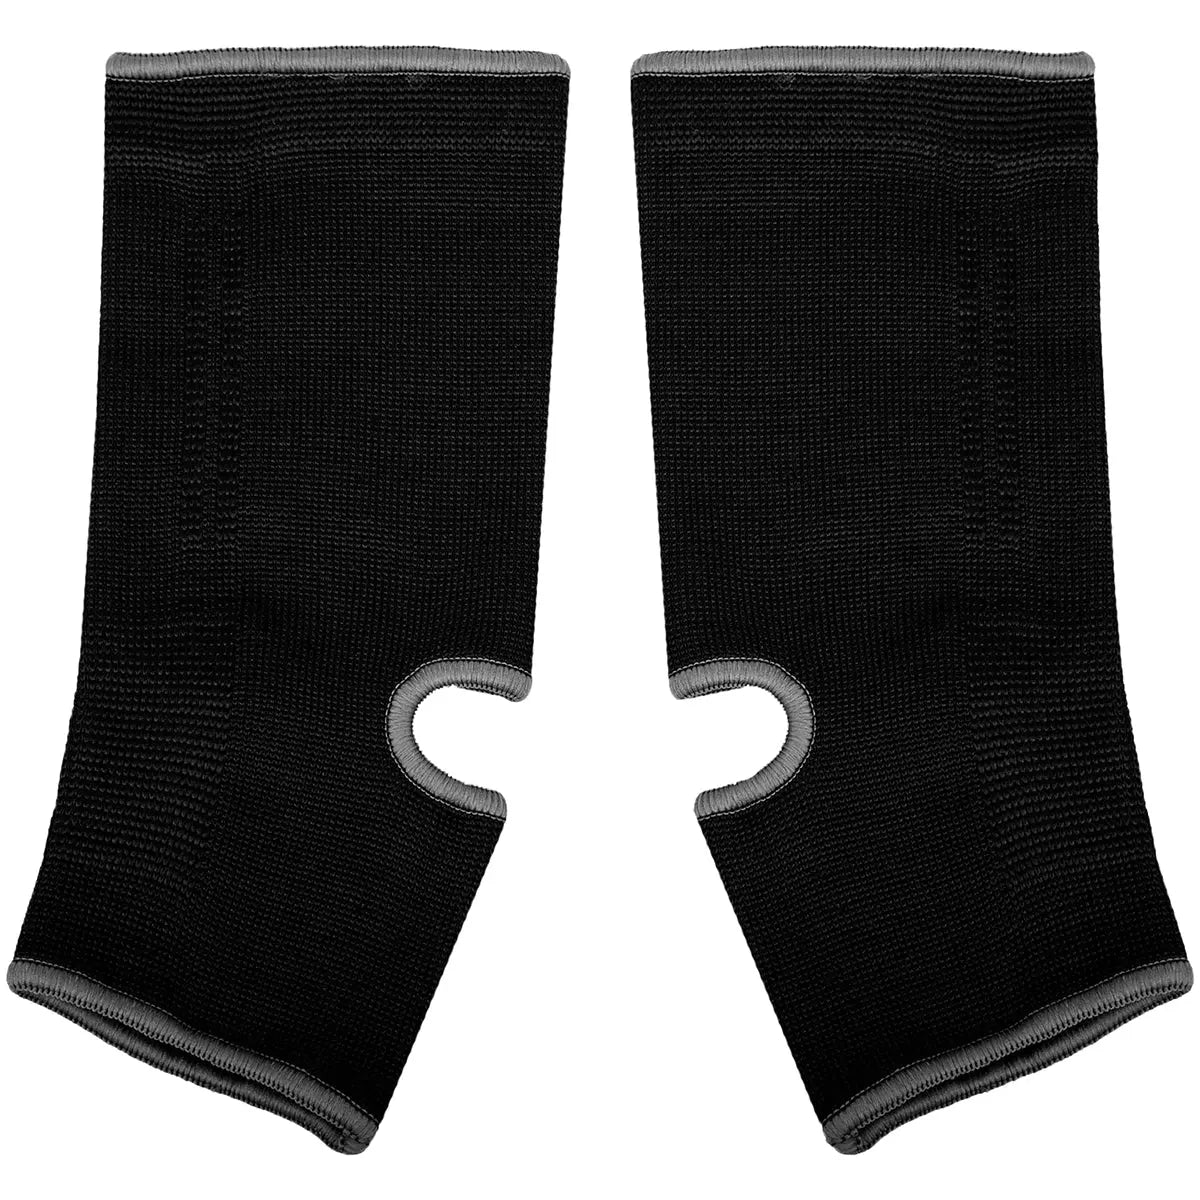 Venum Kontact Slip-On MMA Pro Ankle Support Guards Venum